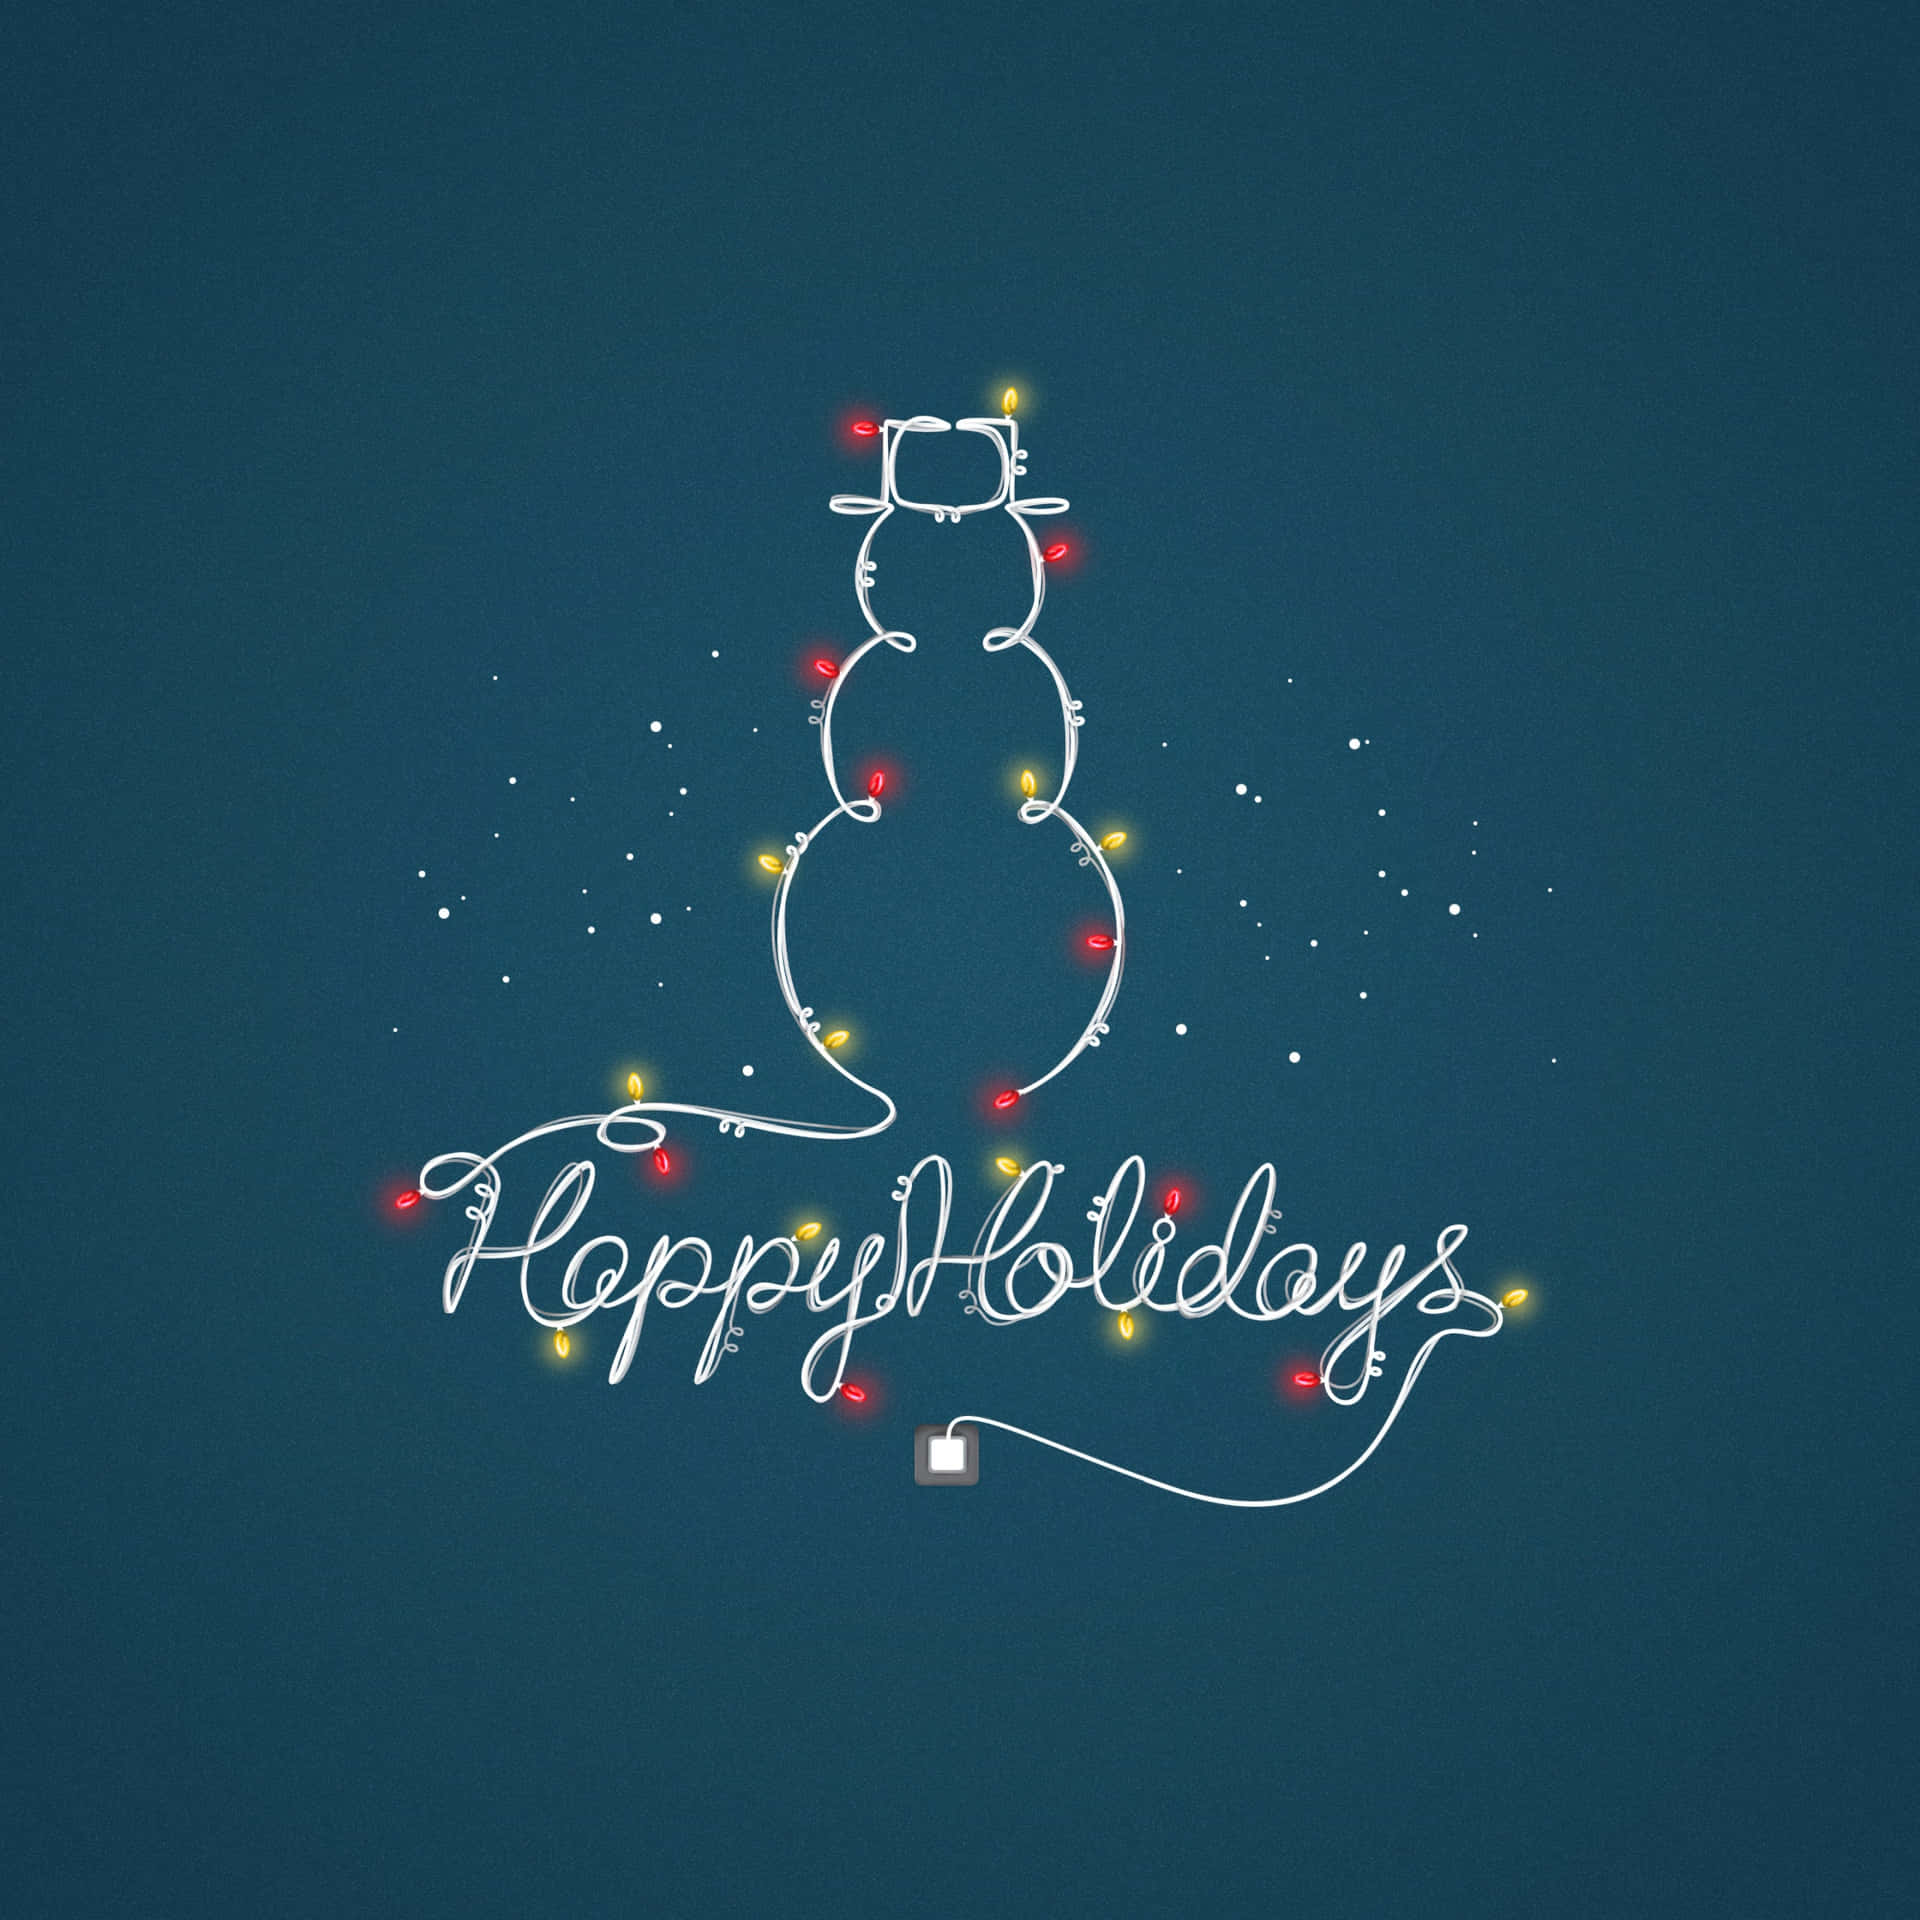 Festive Snowman Lights Holiday Greeting Wallpaper